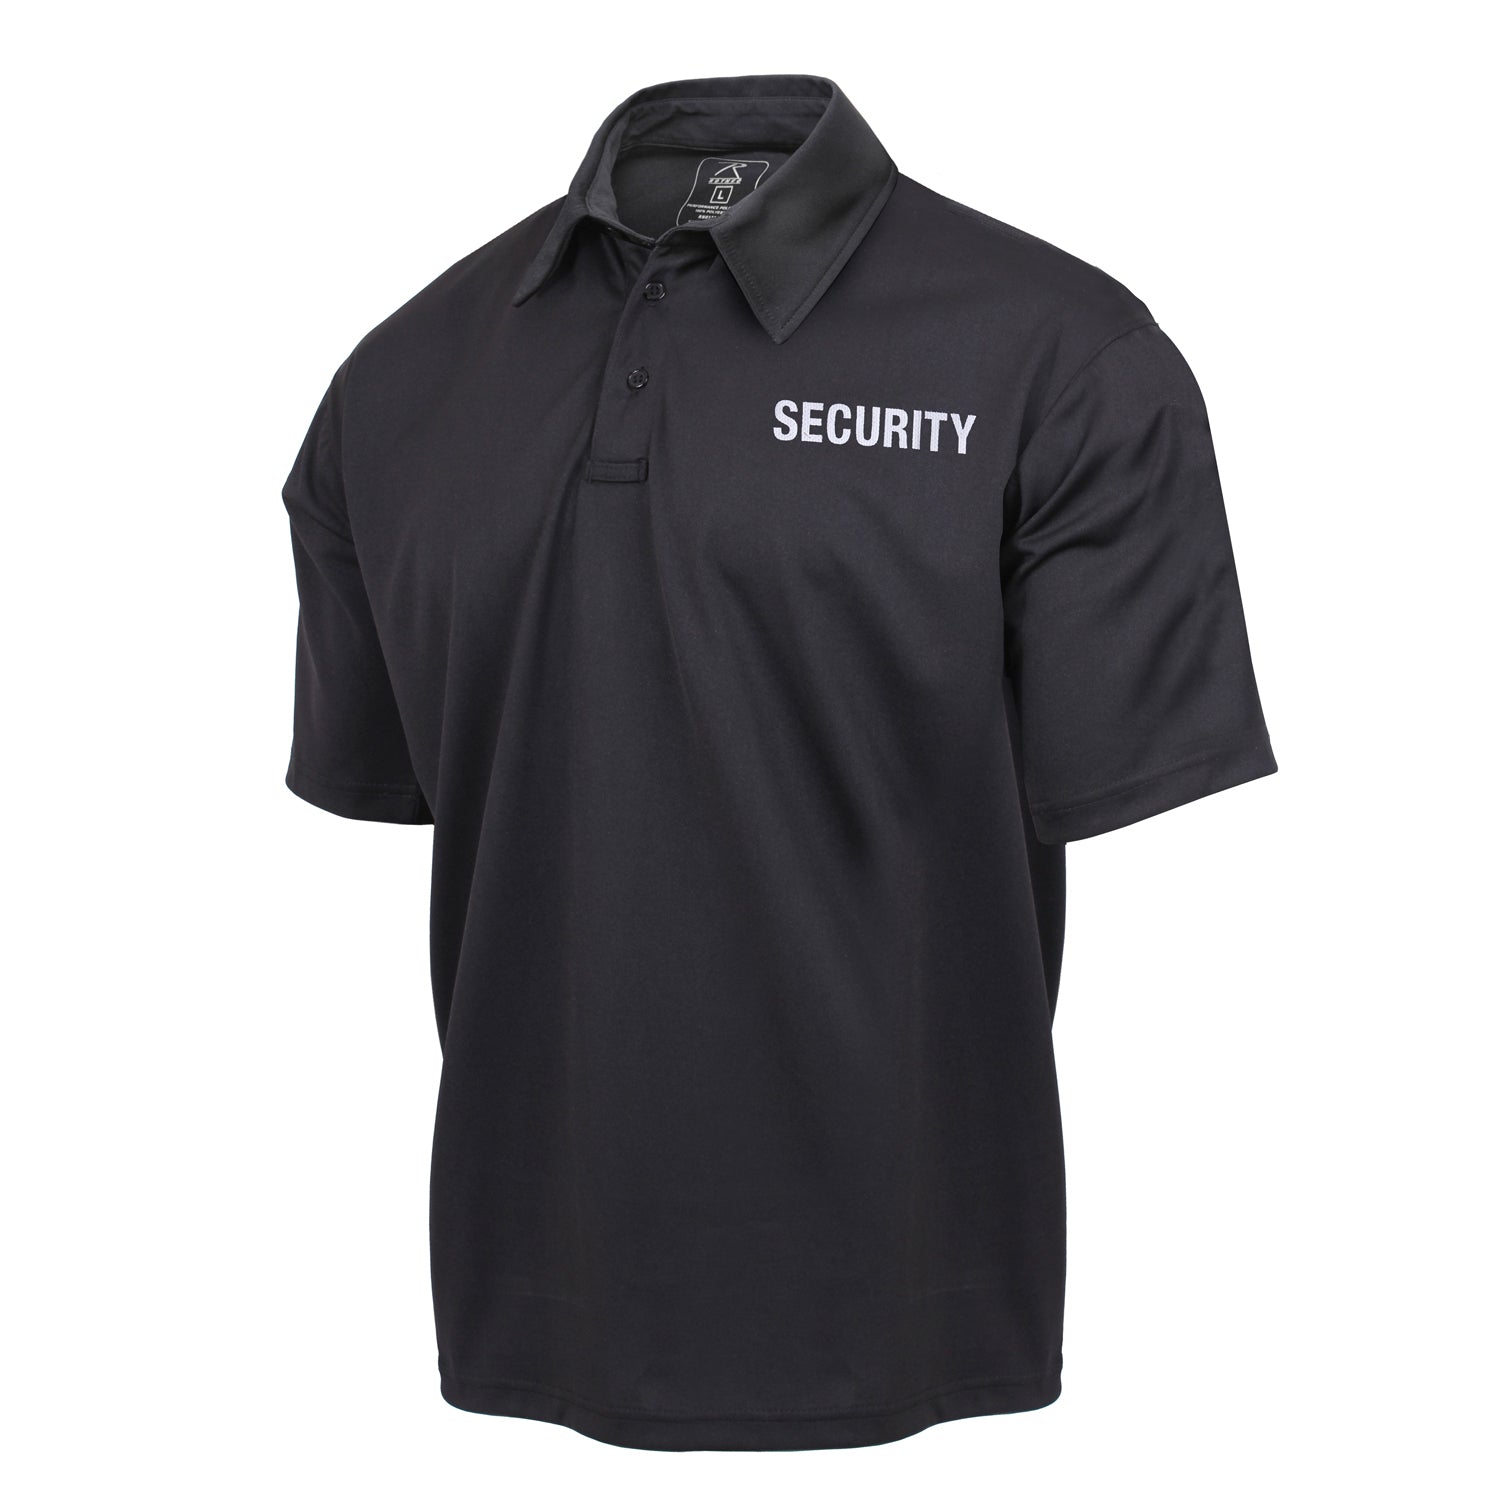 Rothco Moisture Wicking Polo Security T-Shirt Black (3216)